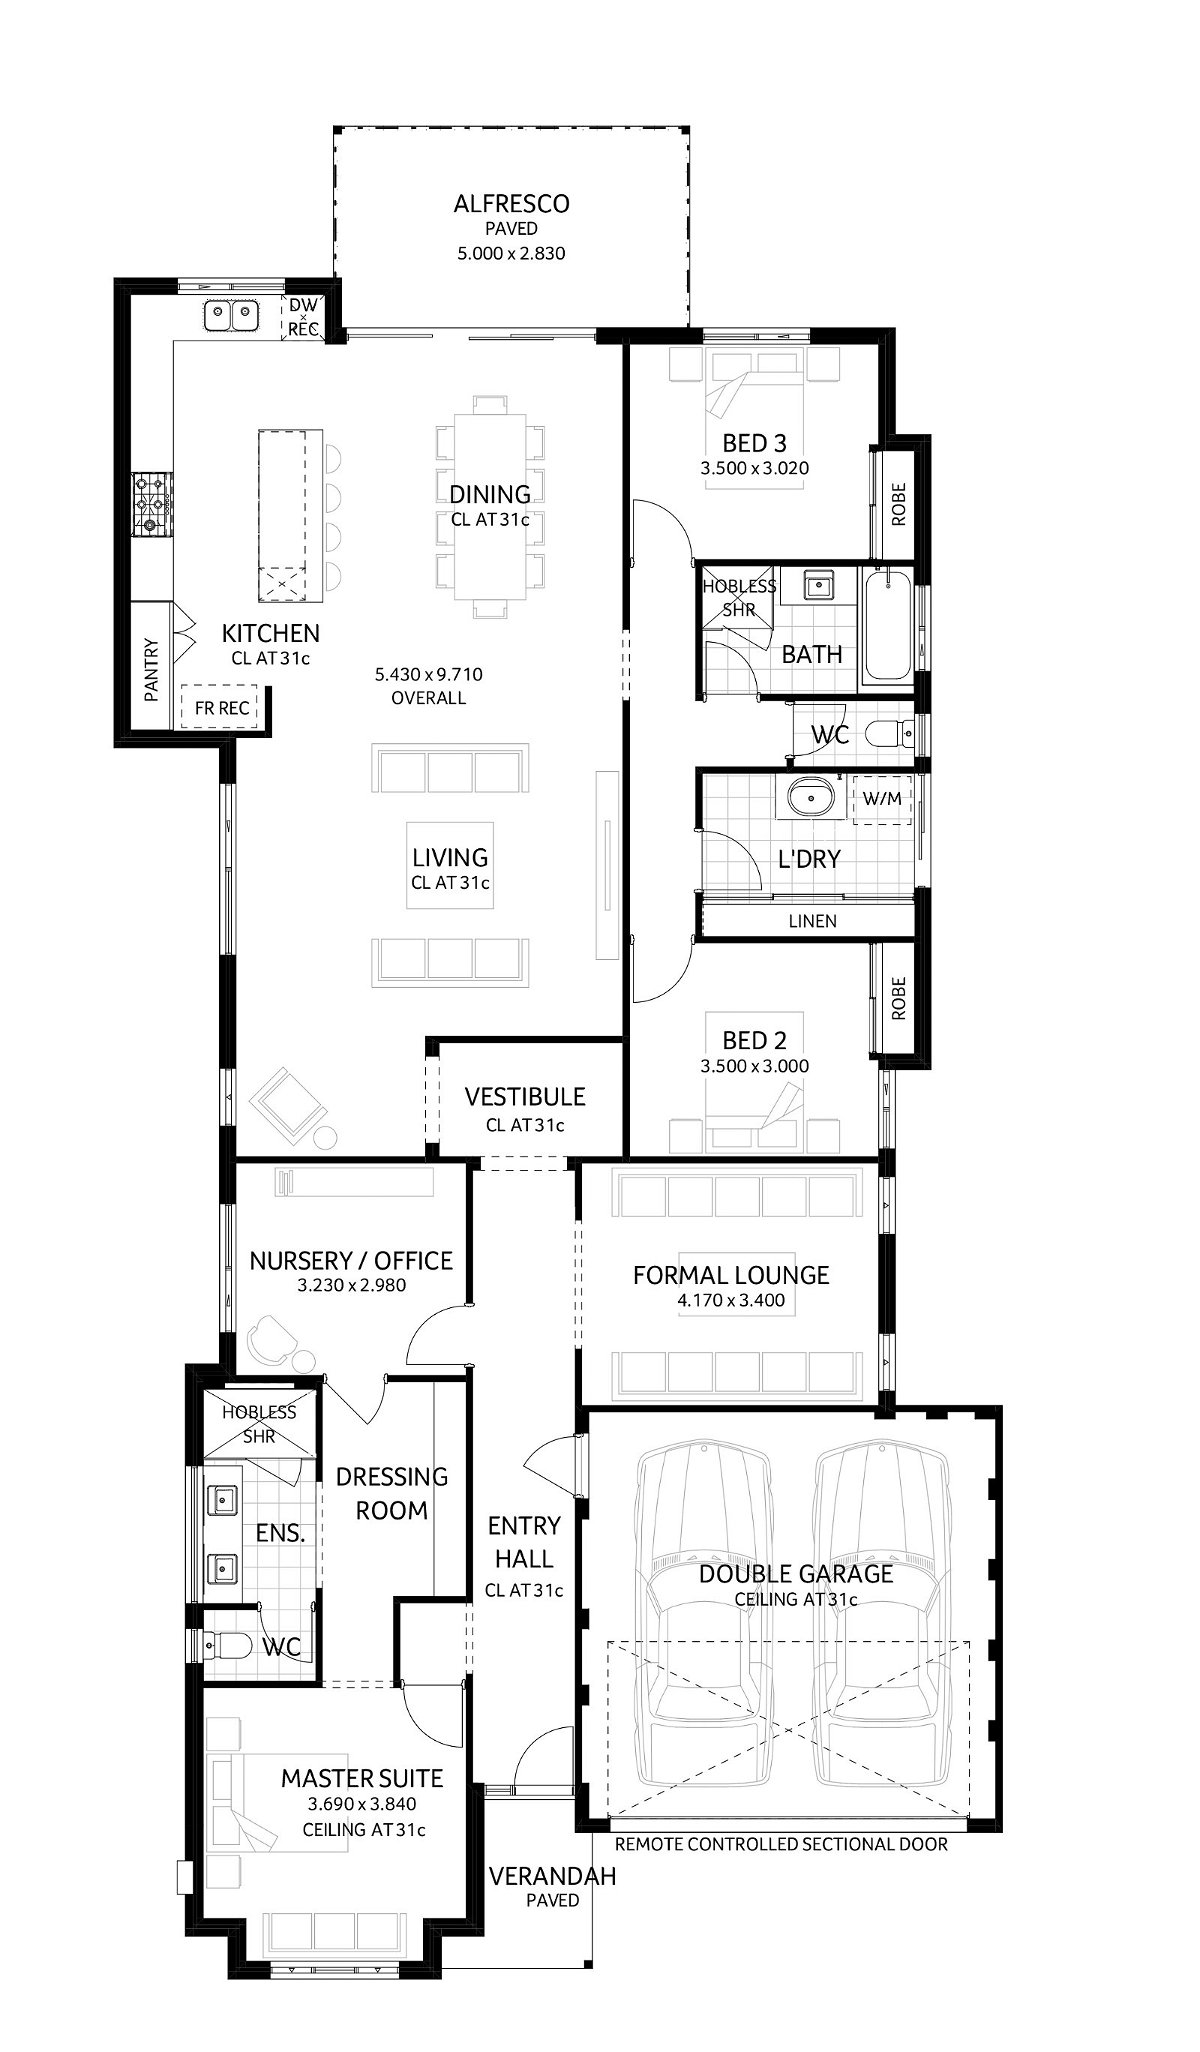 Plunkett Homes - Beaufort | Display - Floorplan - Beaufort Luxe Federation Marketing Plan Croppedjpg